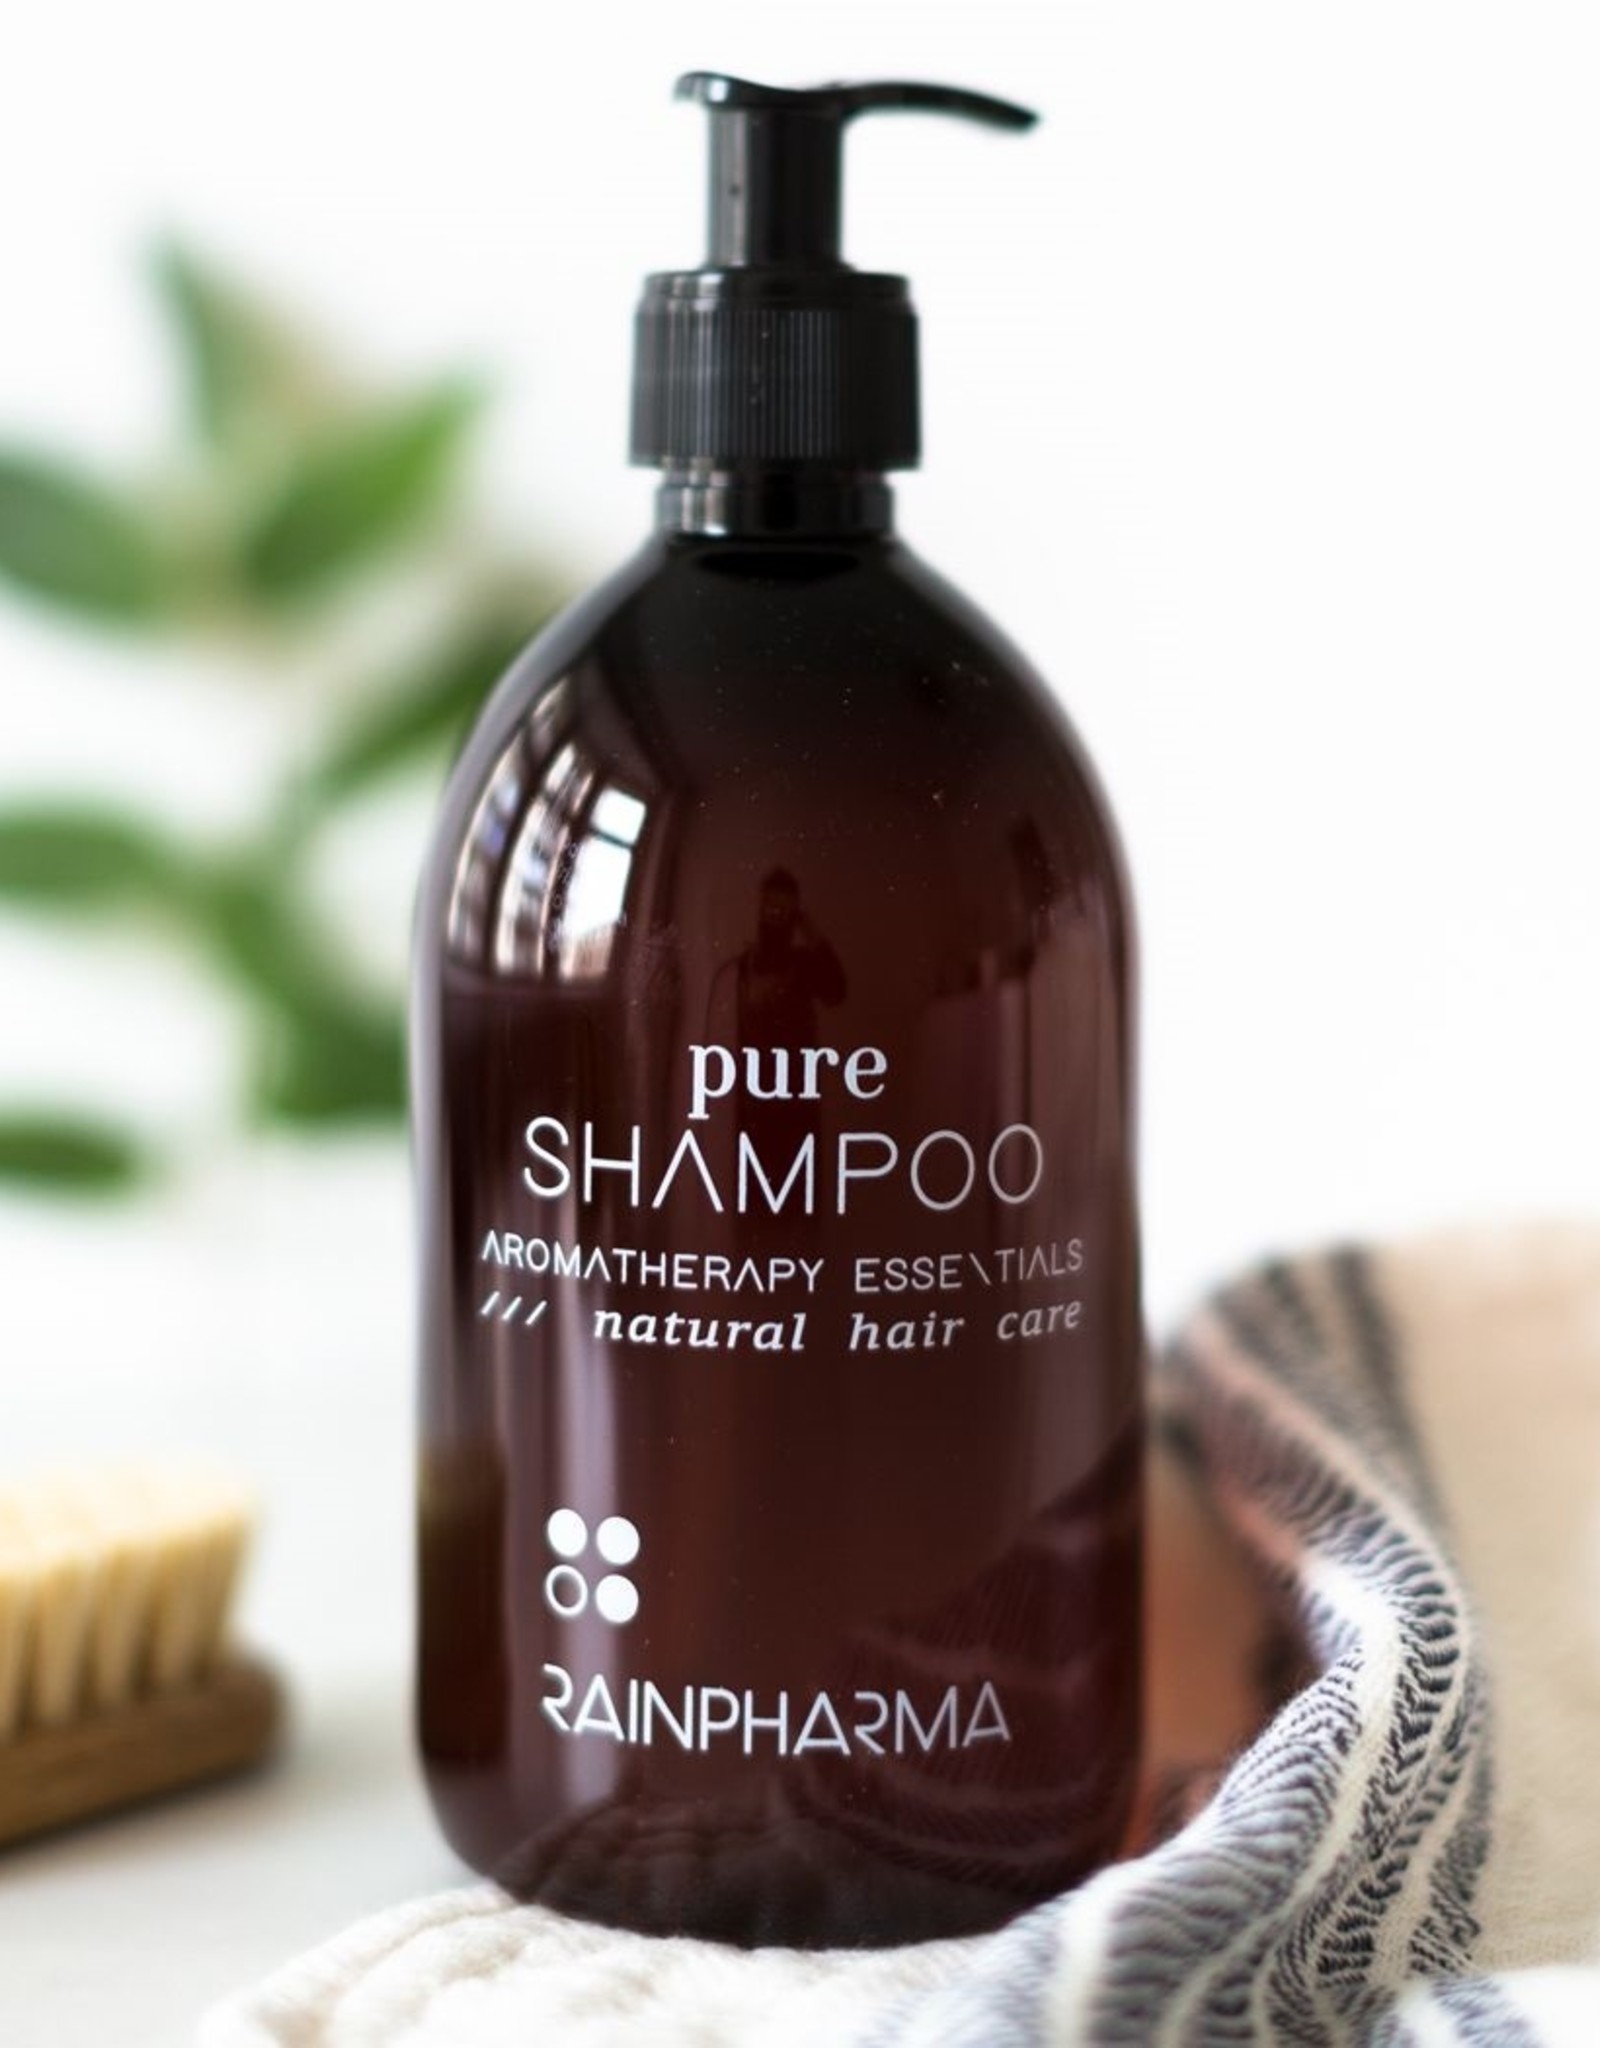 RainPharma Pure Shampoo 250ml - Rainpharma